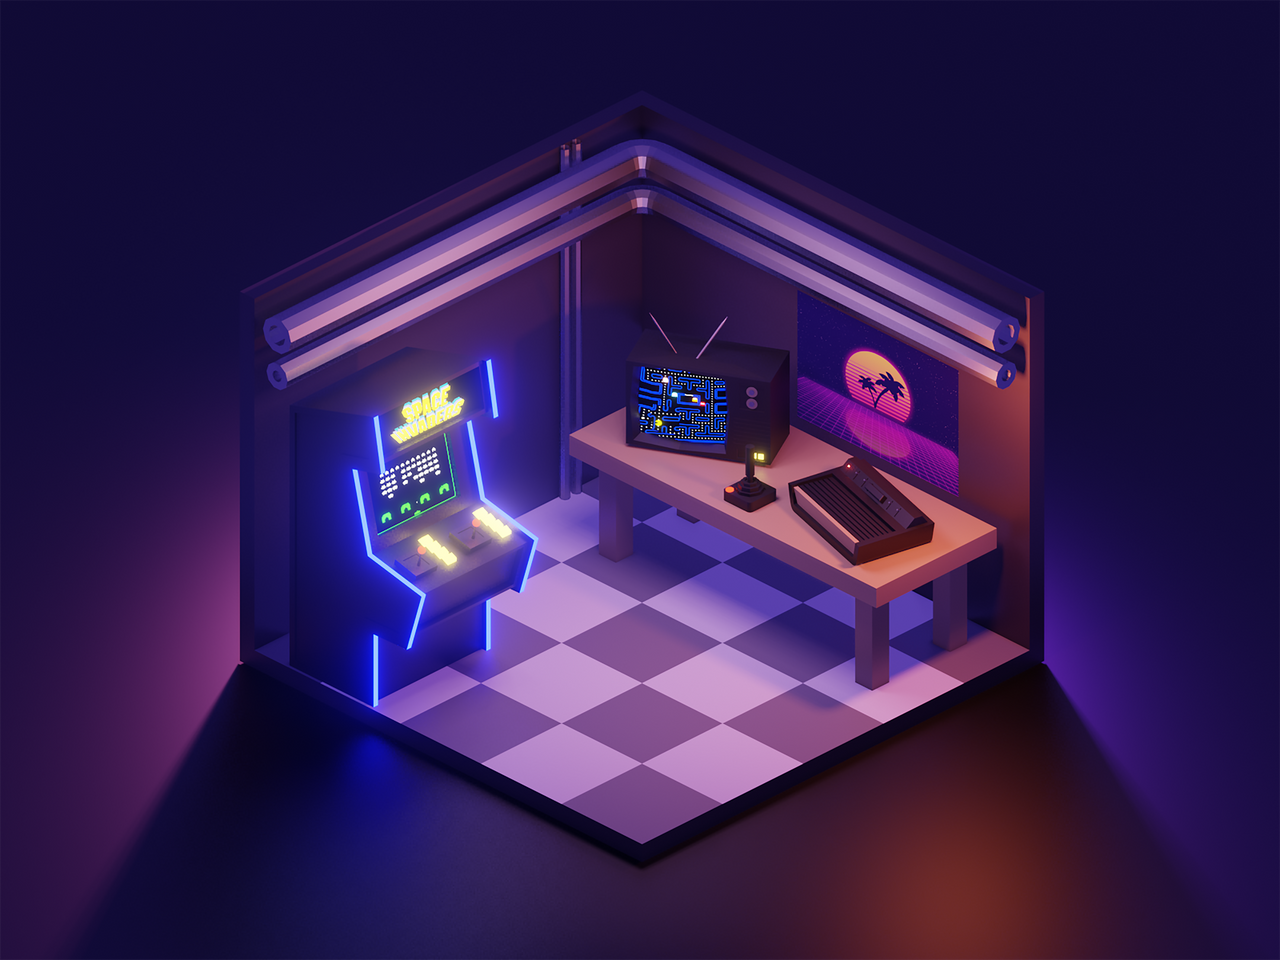 The Retro Game room by Explorerblaze on DeviantArt